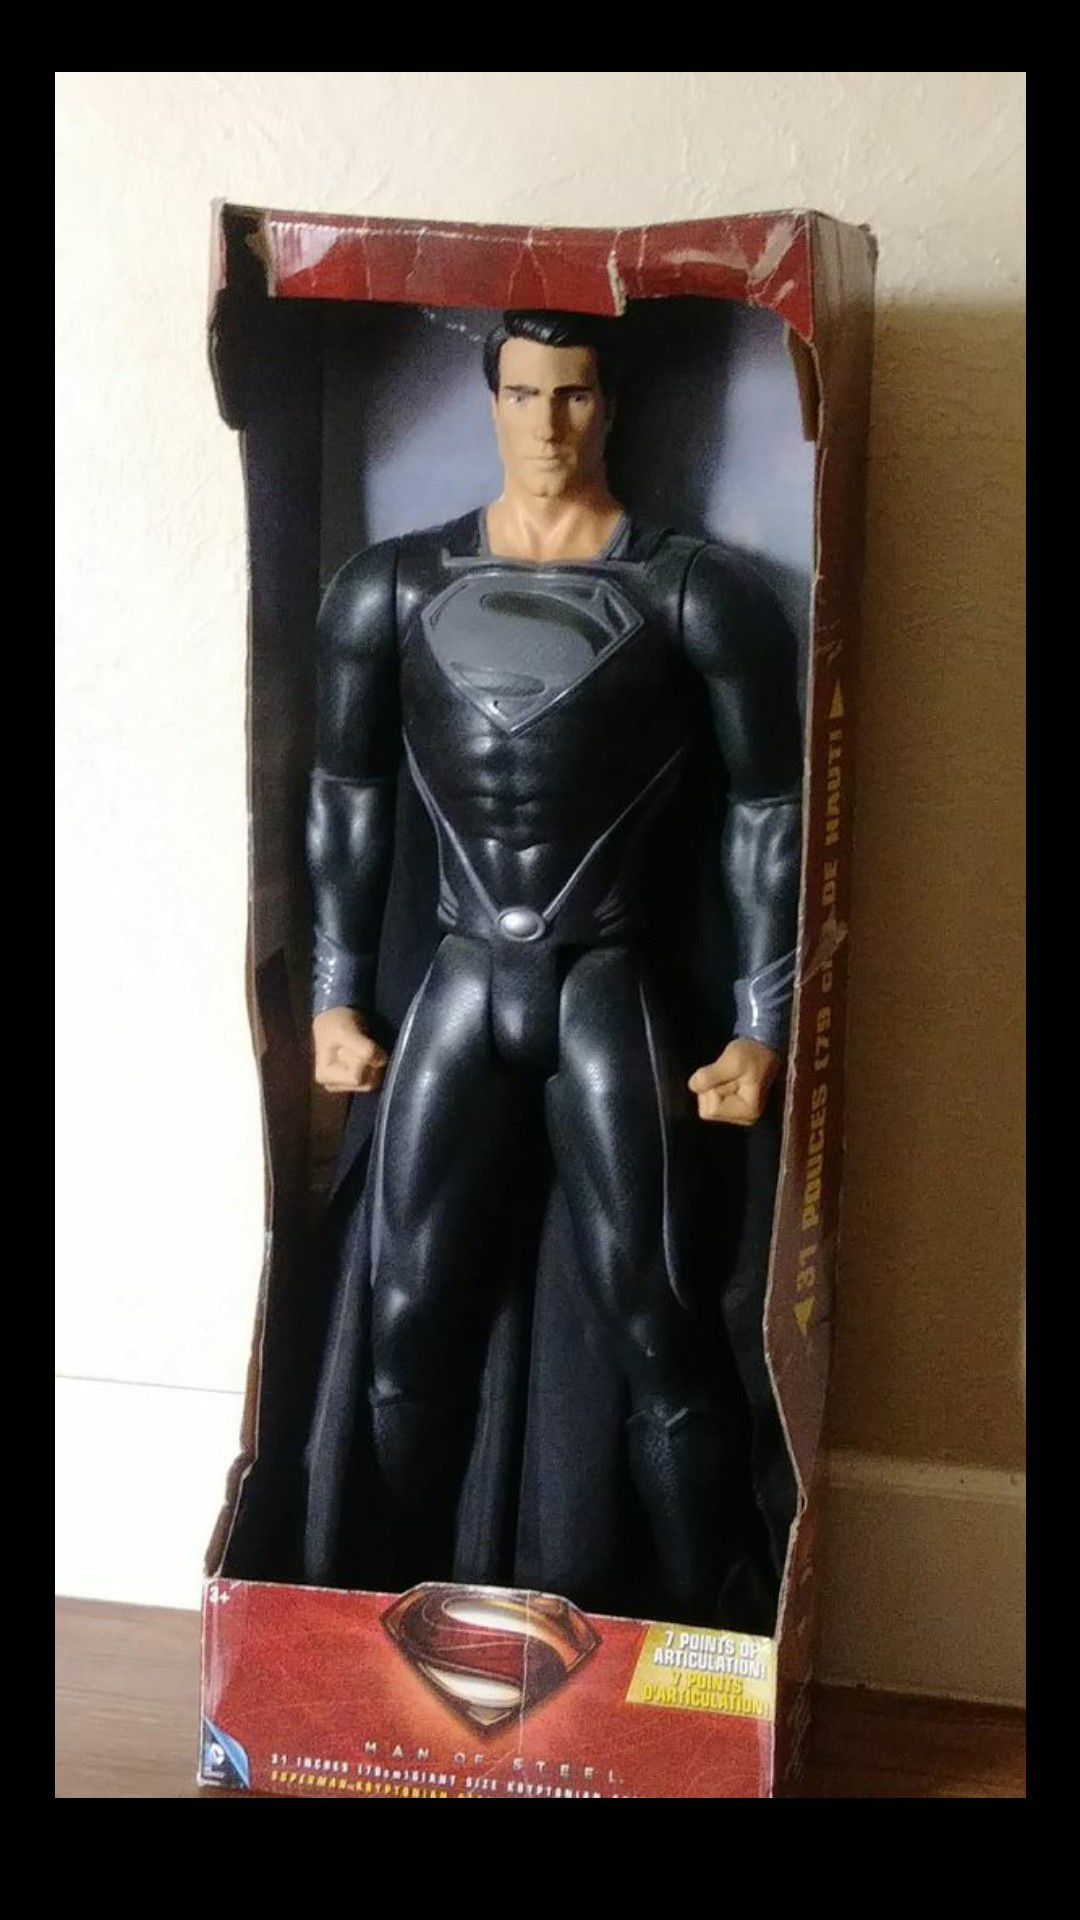 Super man 31 inches tall